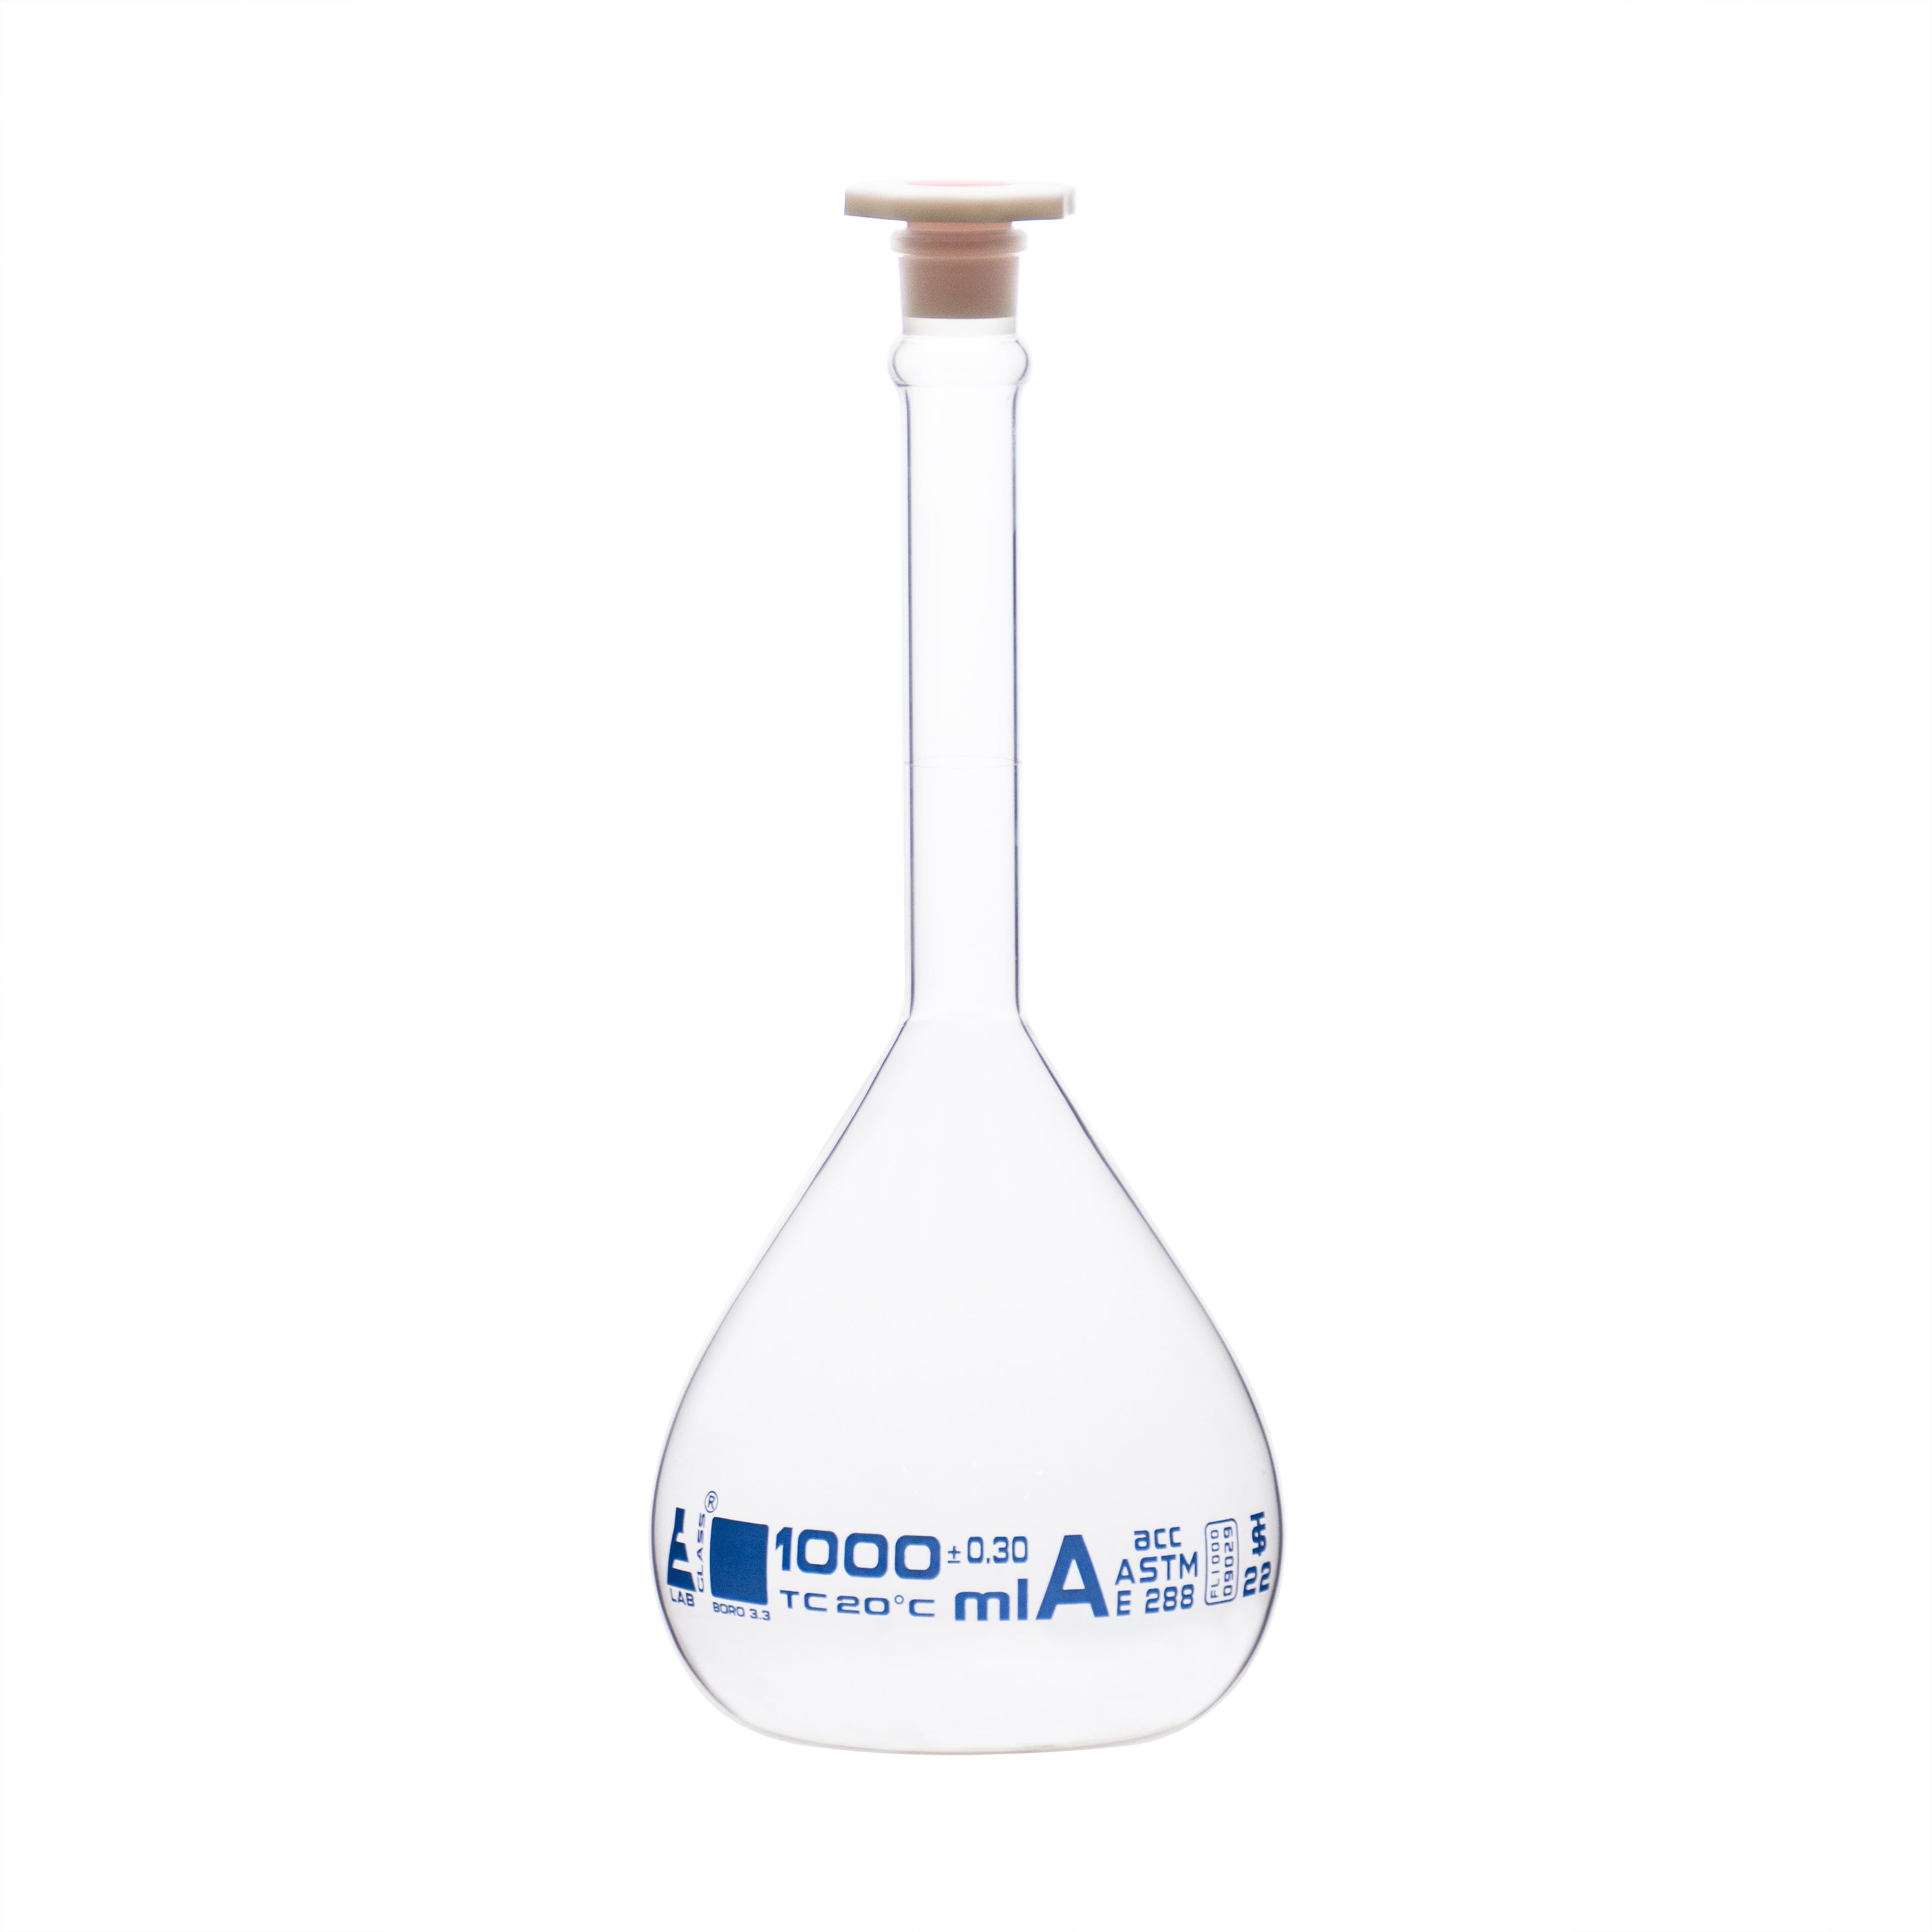 Borosilicate Volumetric Flask with Polyethylene Stopper, 1000 ml, Class A, Blue Print, ASTM, Autoclavable